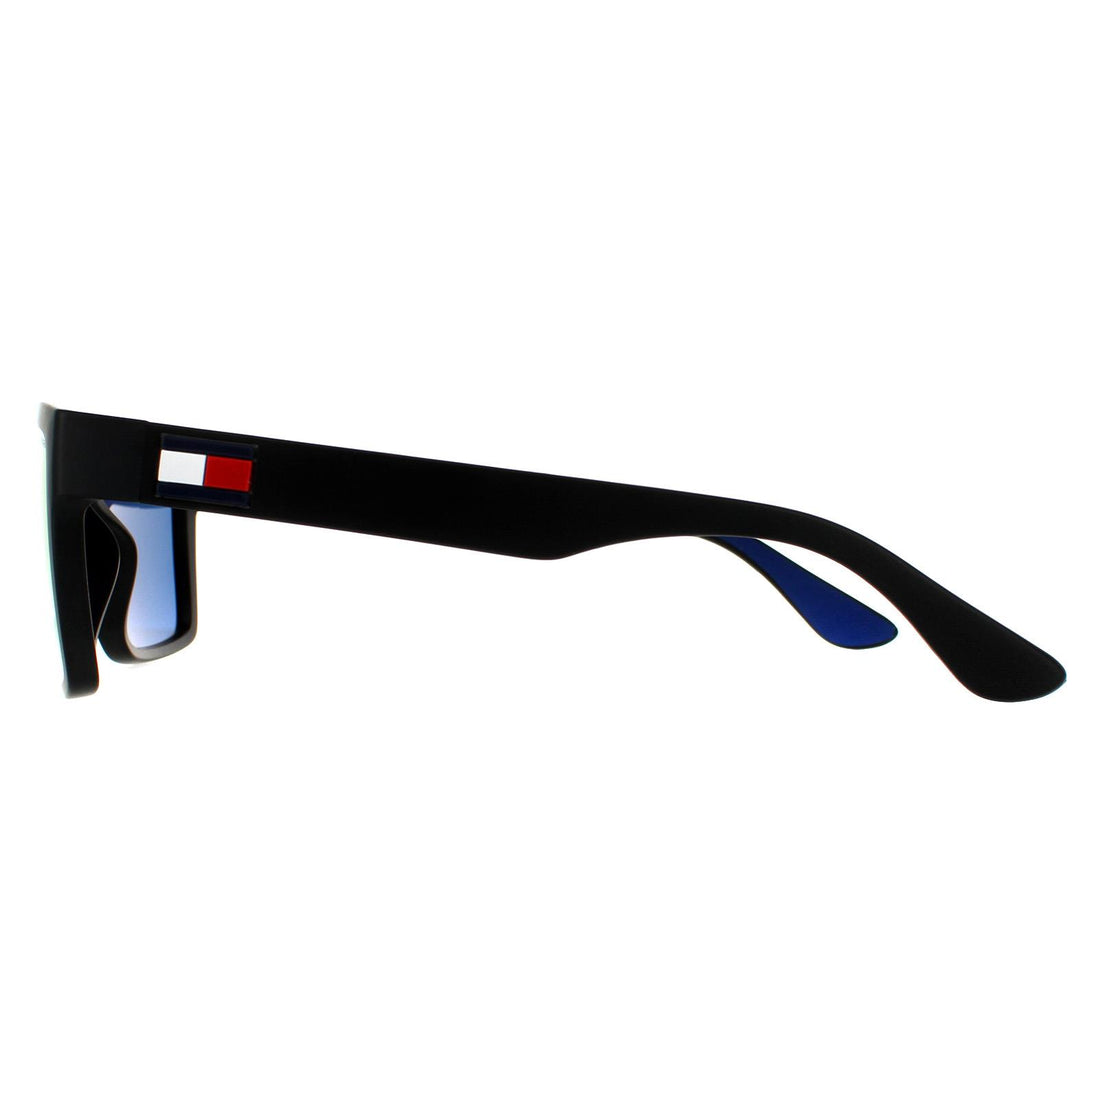 Tommy Hilfiger Sunglasses TH 1605/S 003 MI Matte Black Grey Infrared